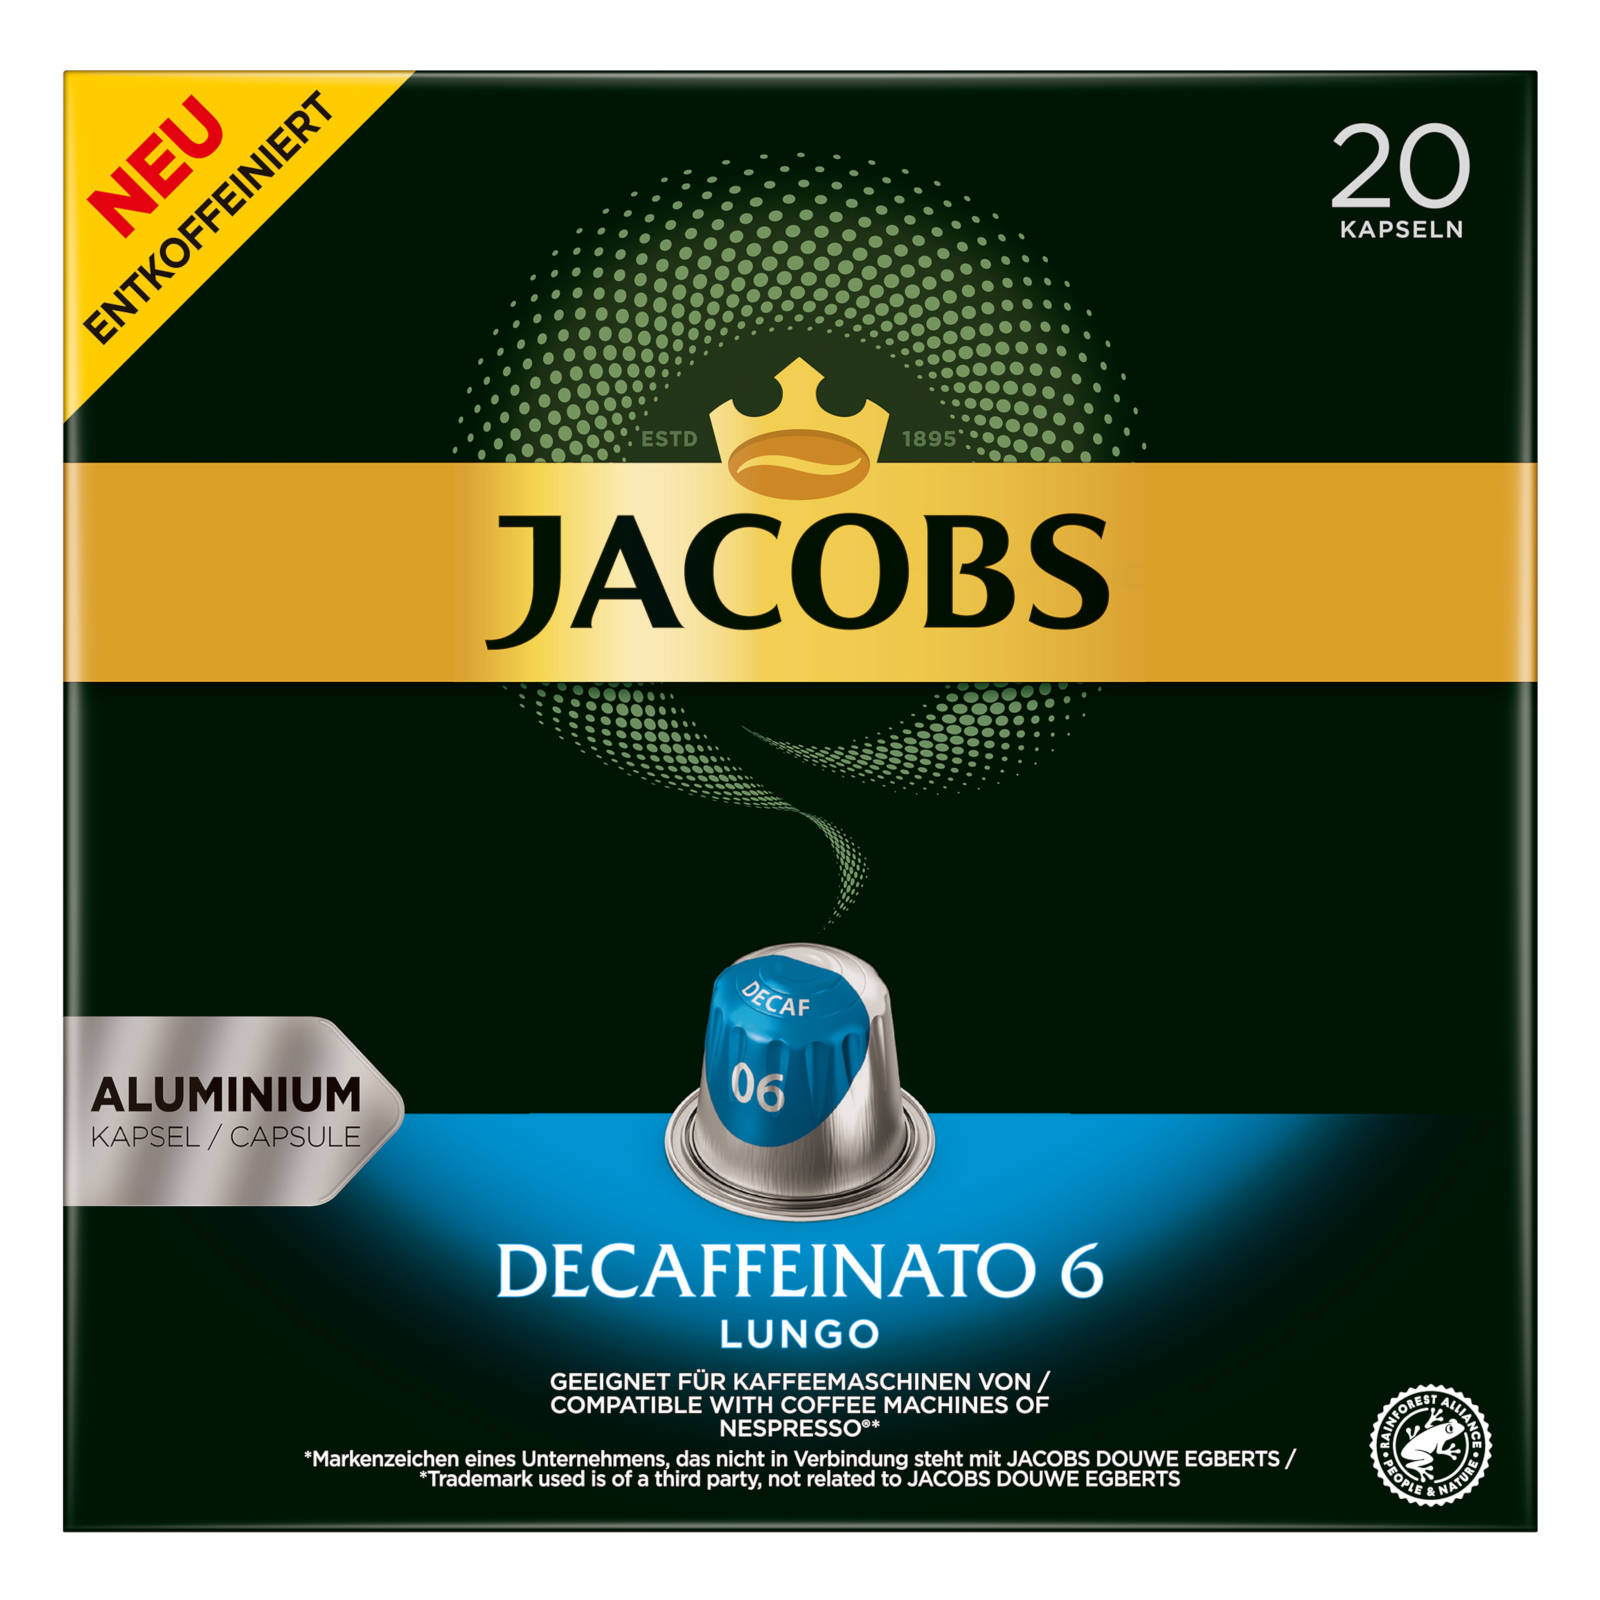 JACOBS Lungo 6 Classico & Lungo 6 Nespresso®* je 100 System) Decaffeinato kompatible (Nespresso Kaffeekapseln